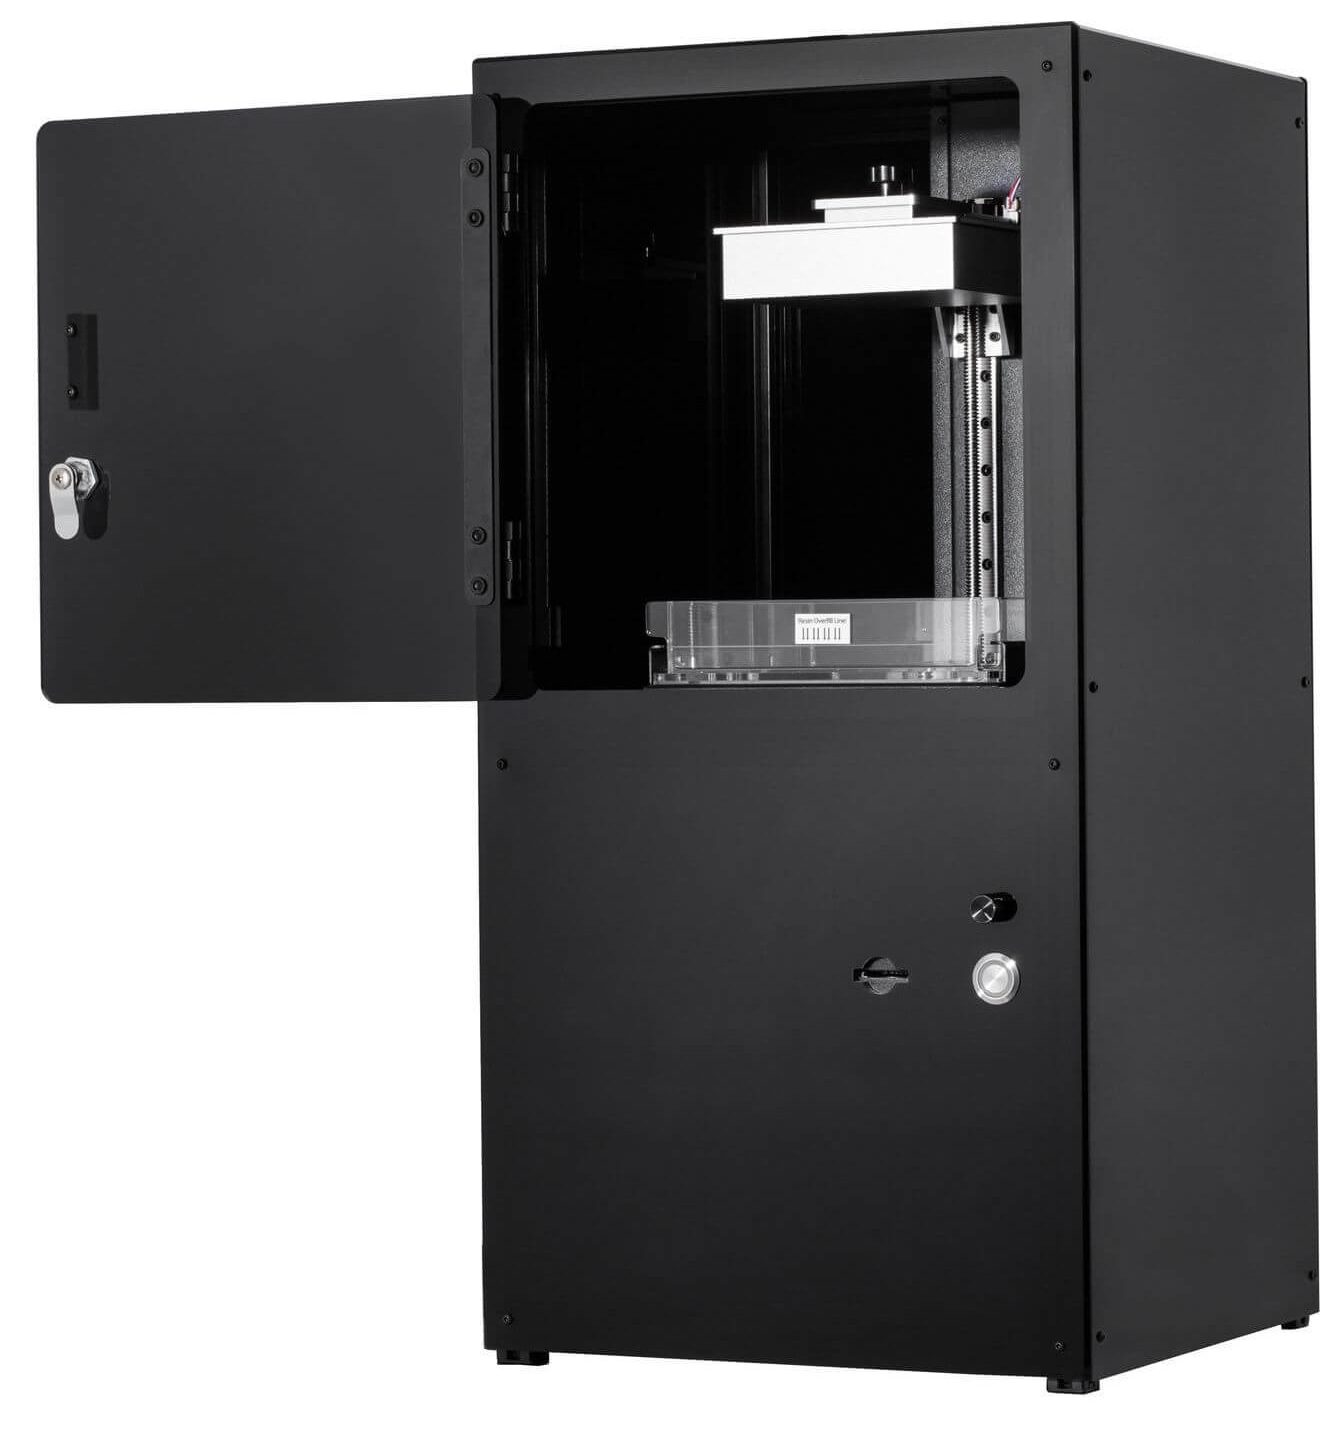 Peopoly Moai – SLA 3D Printer In-Depth Review 3 (1)